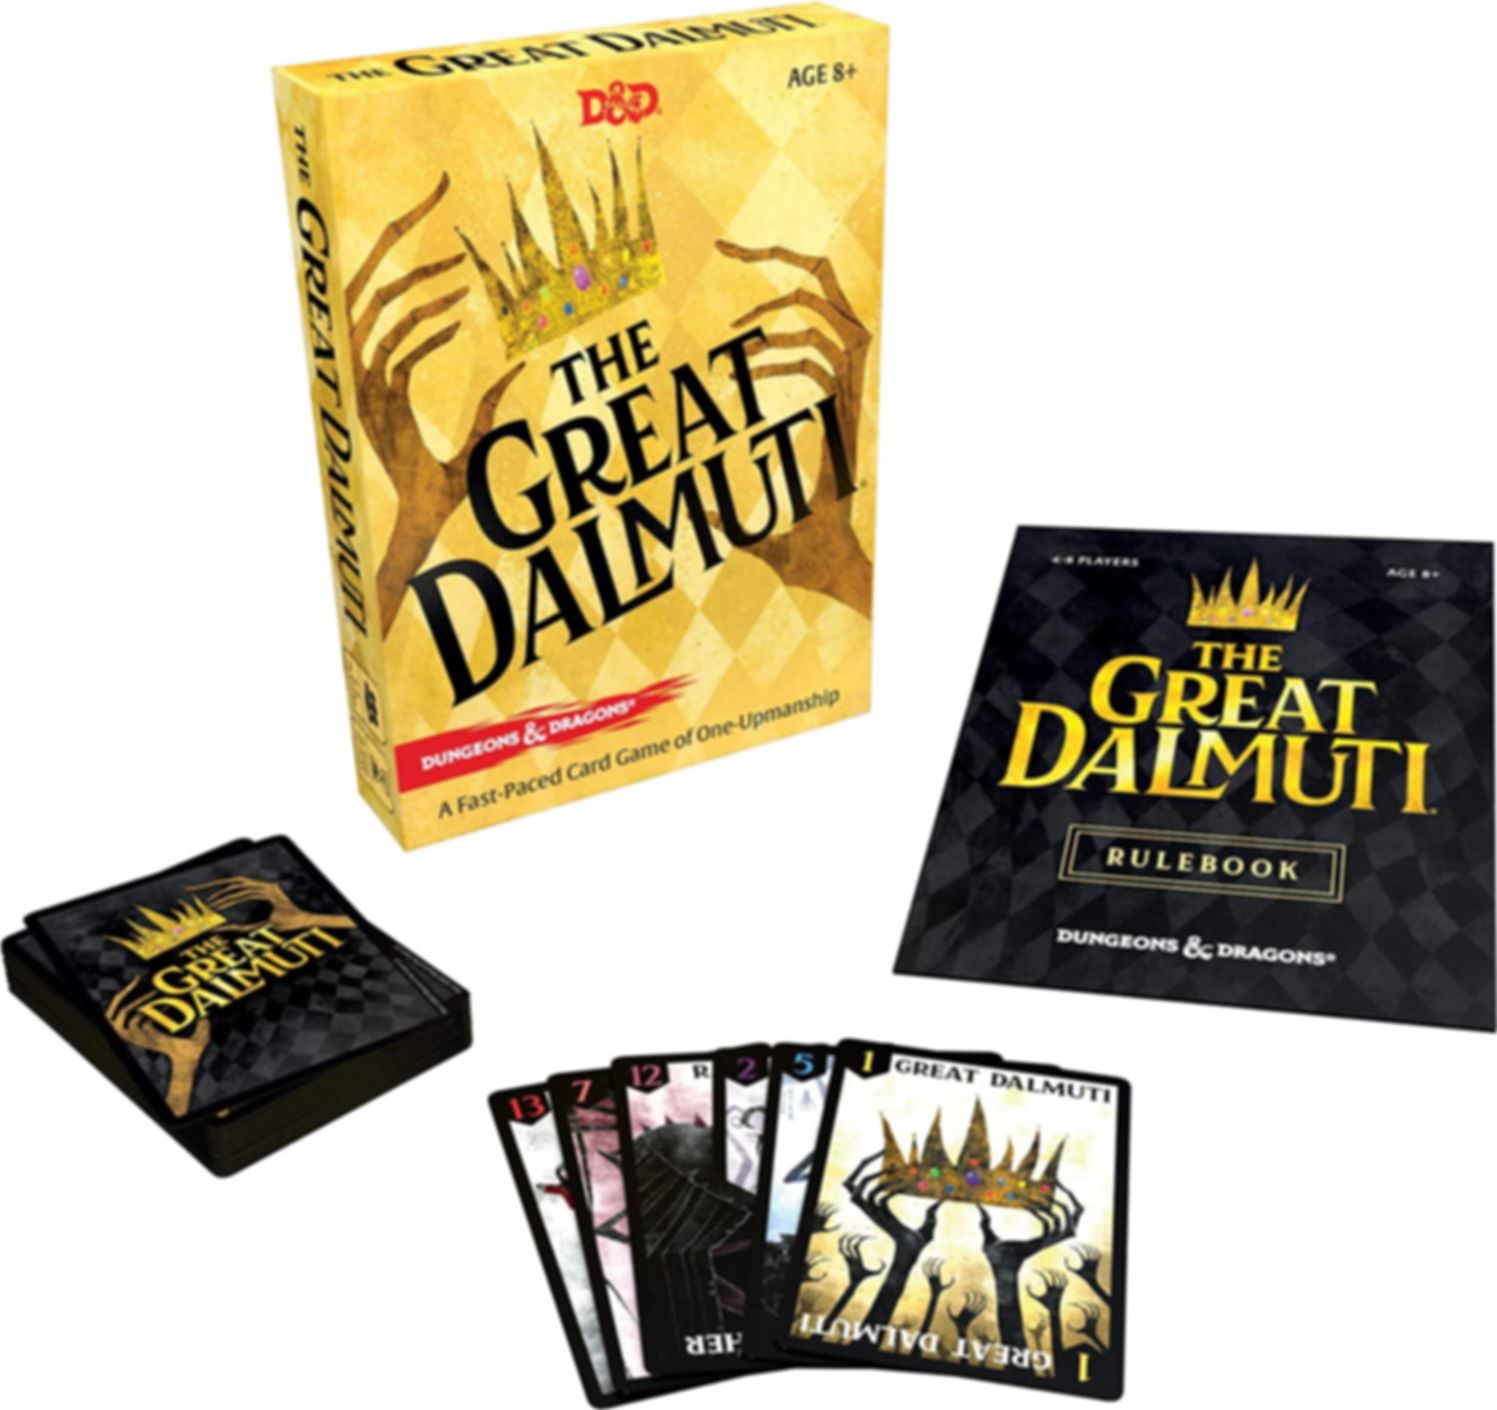 The Great Dalmuti: Dungeons & Dragons komponenten